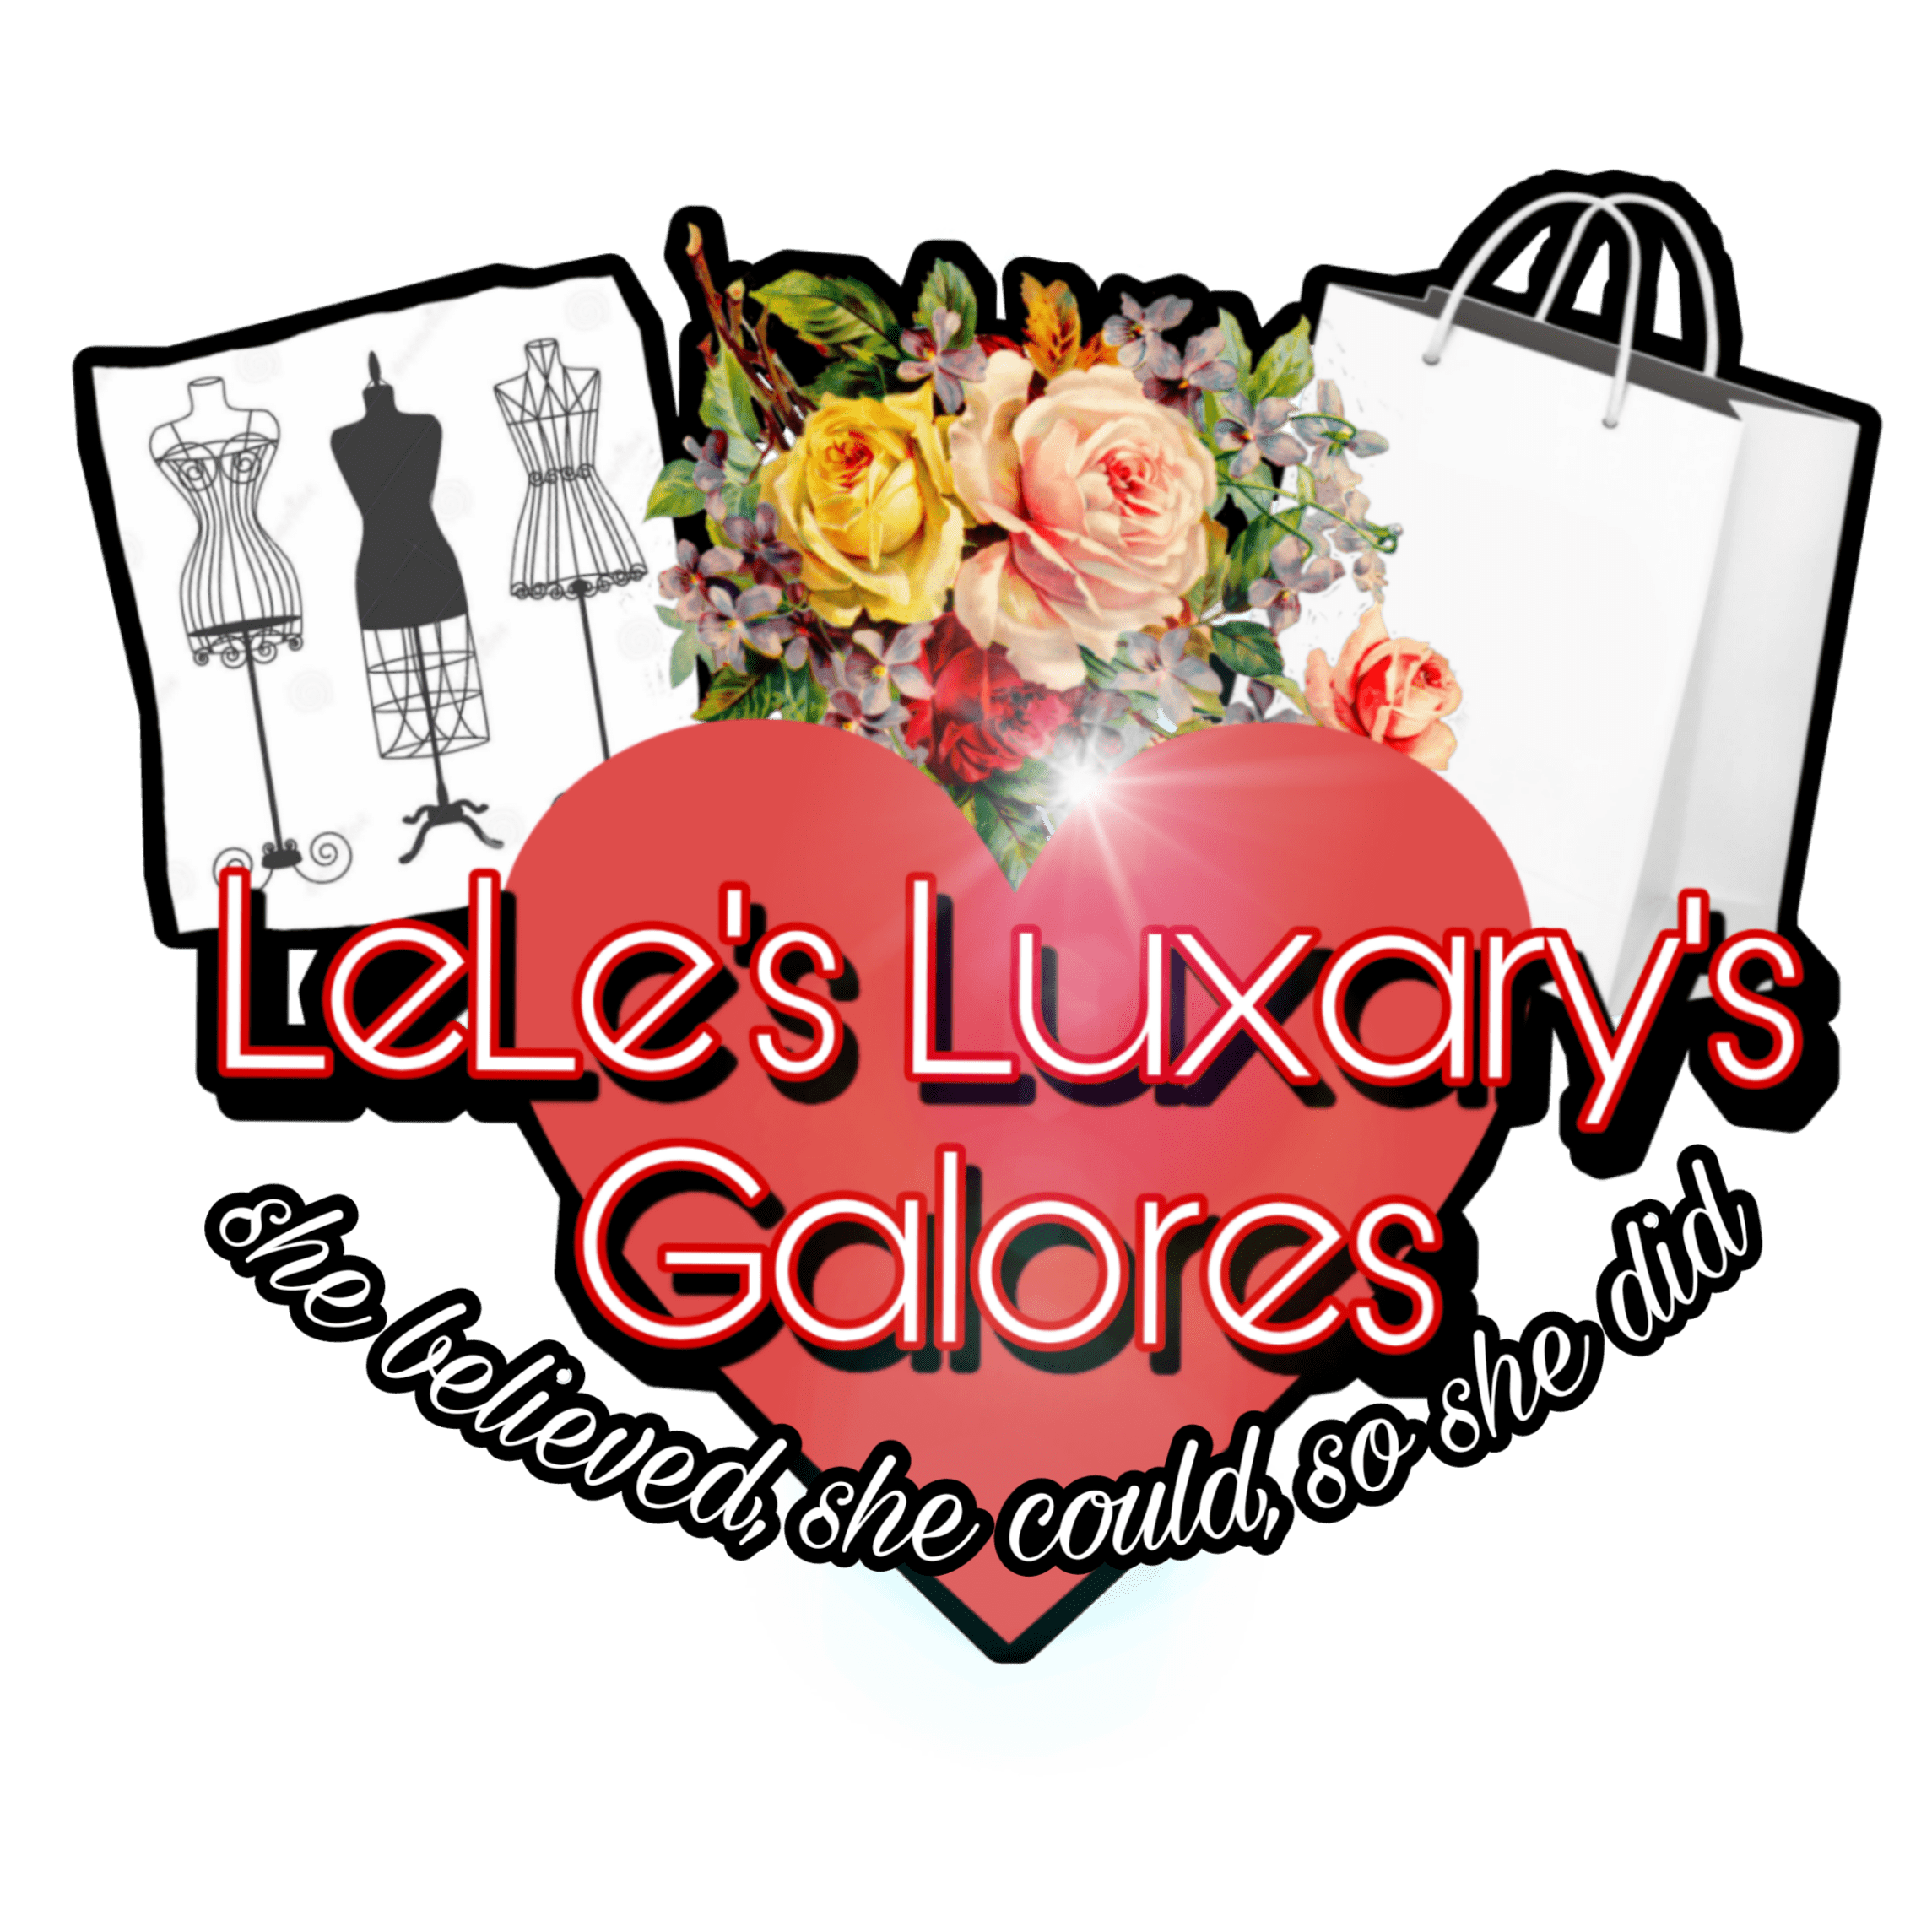 Lelee's Luxuries Galore